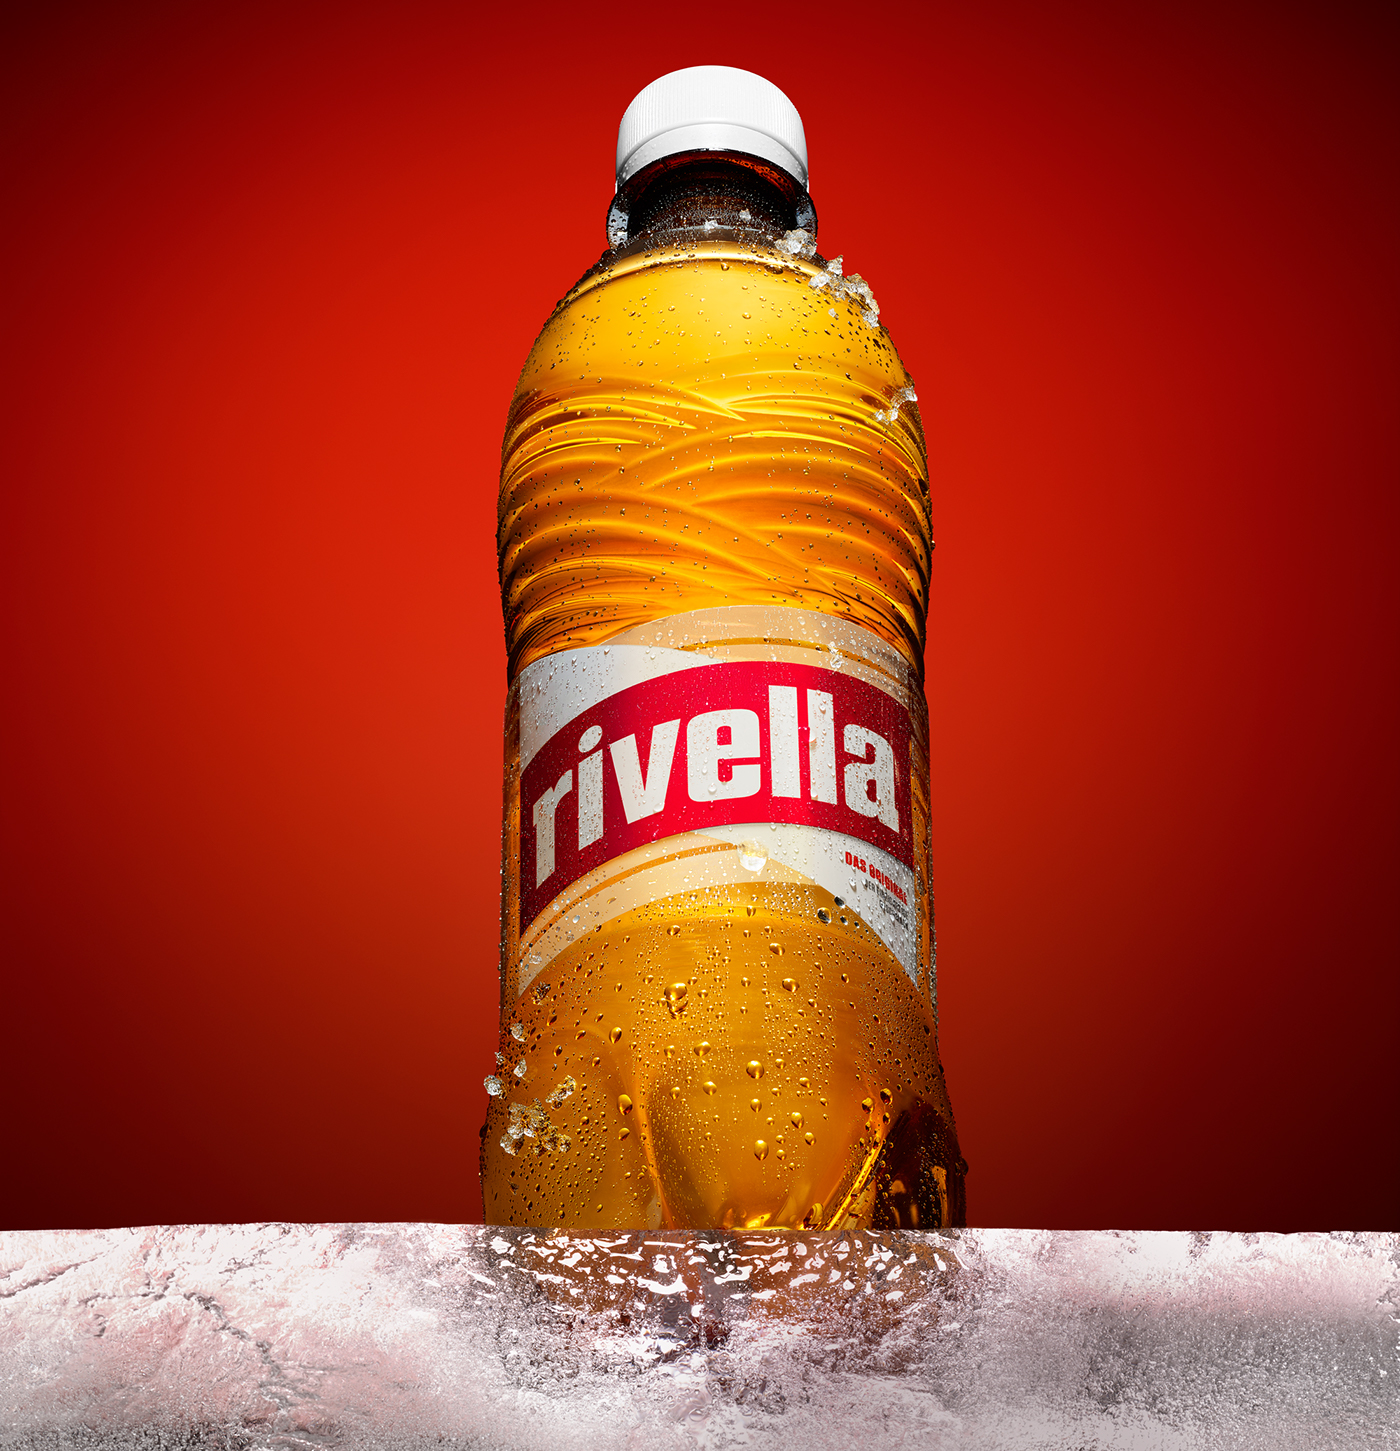 Rivella fuseproject san francisco identity refresh refresh Rebrand Switzerland Swiss Brand soda red swiss brand new design label design